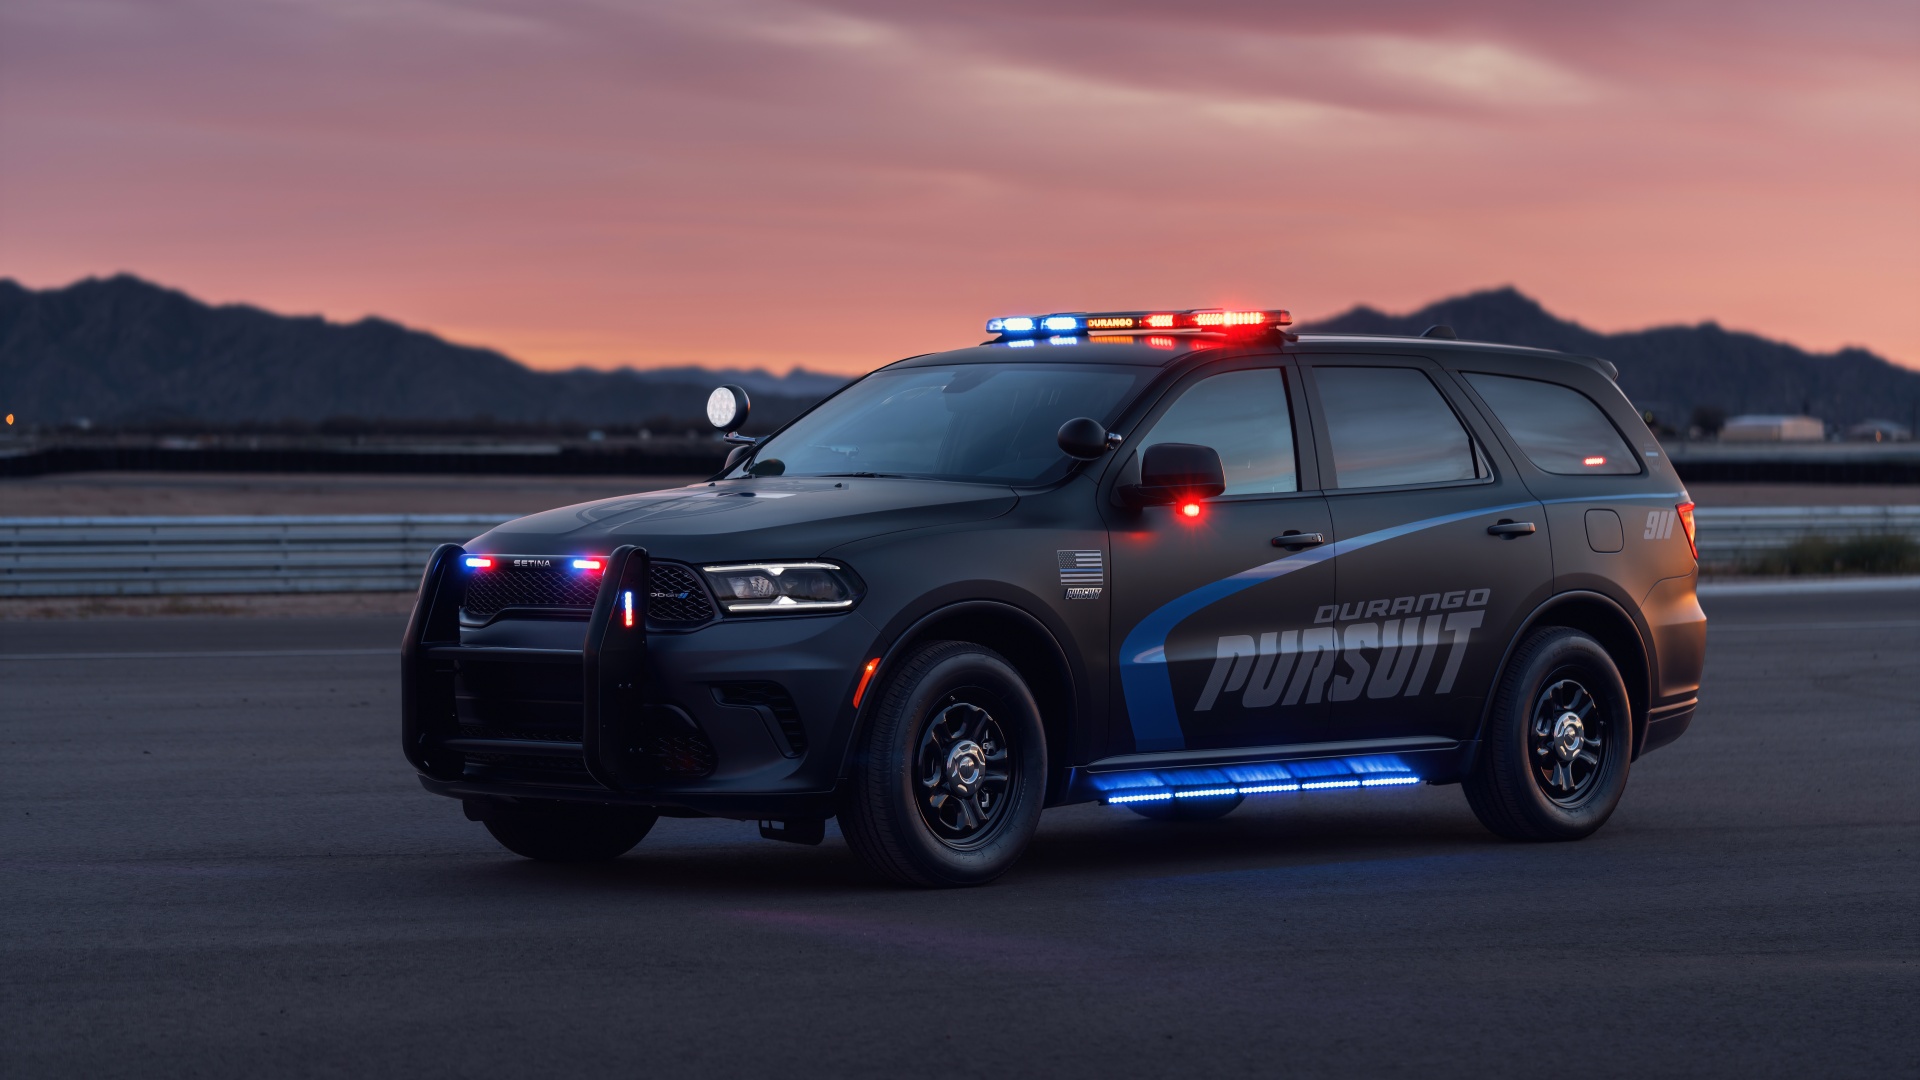 Dodge Durango Pursuit Wallpaper 4K, Police Cars, 2021, 5K, 8K, Cars, #2702